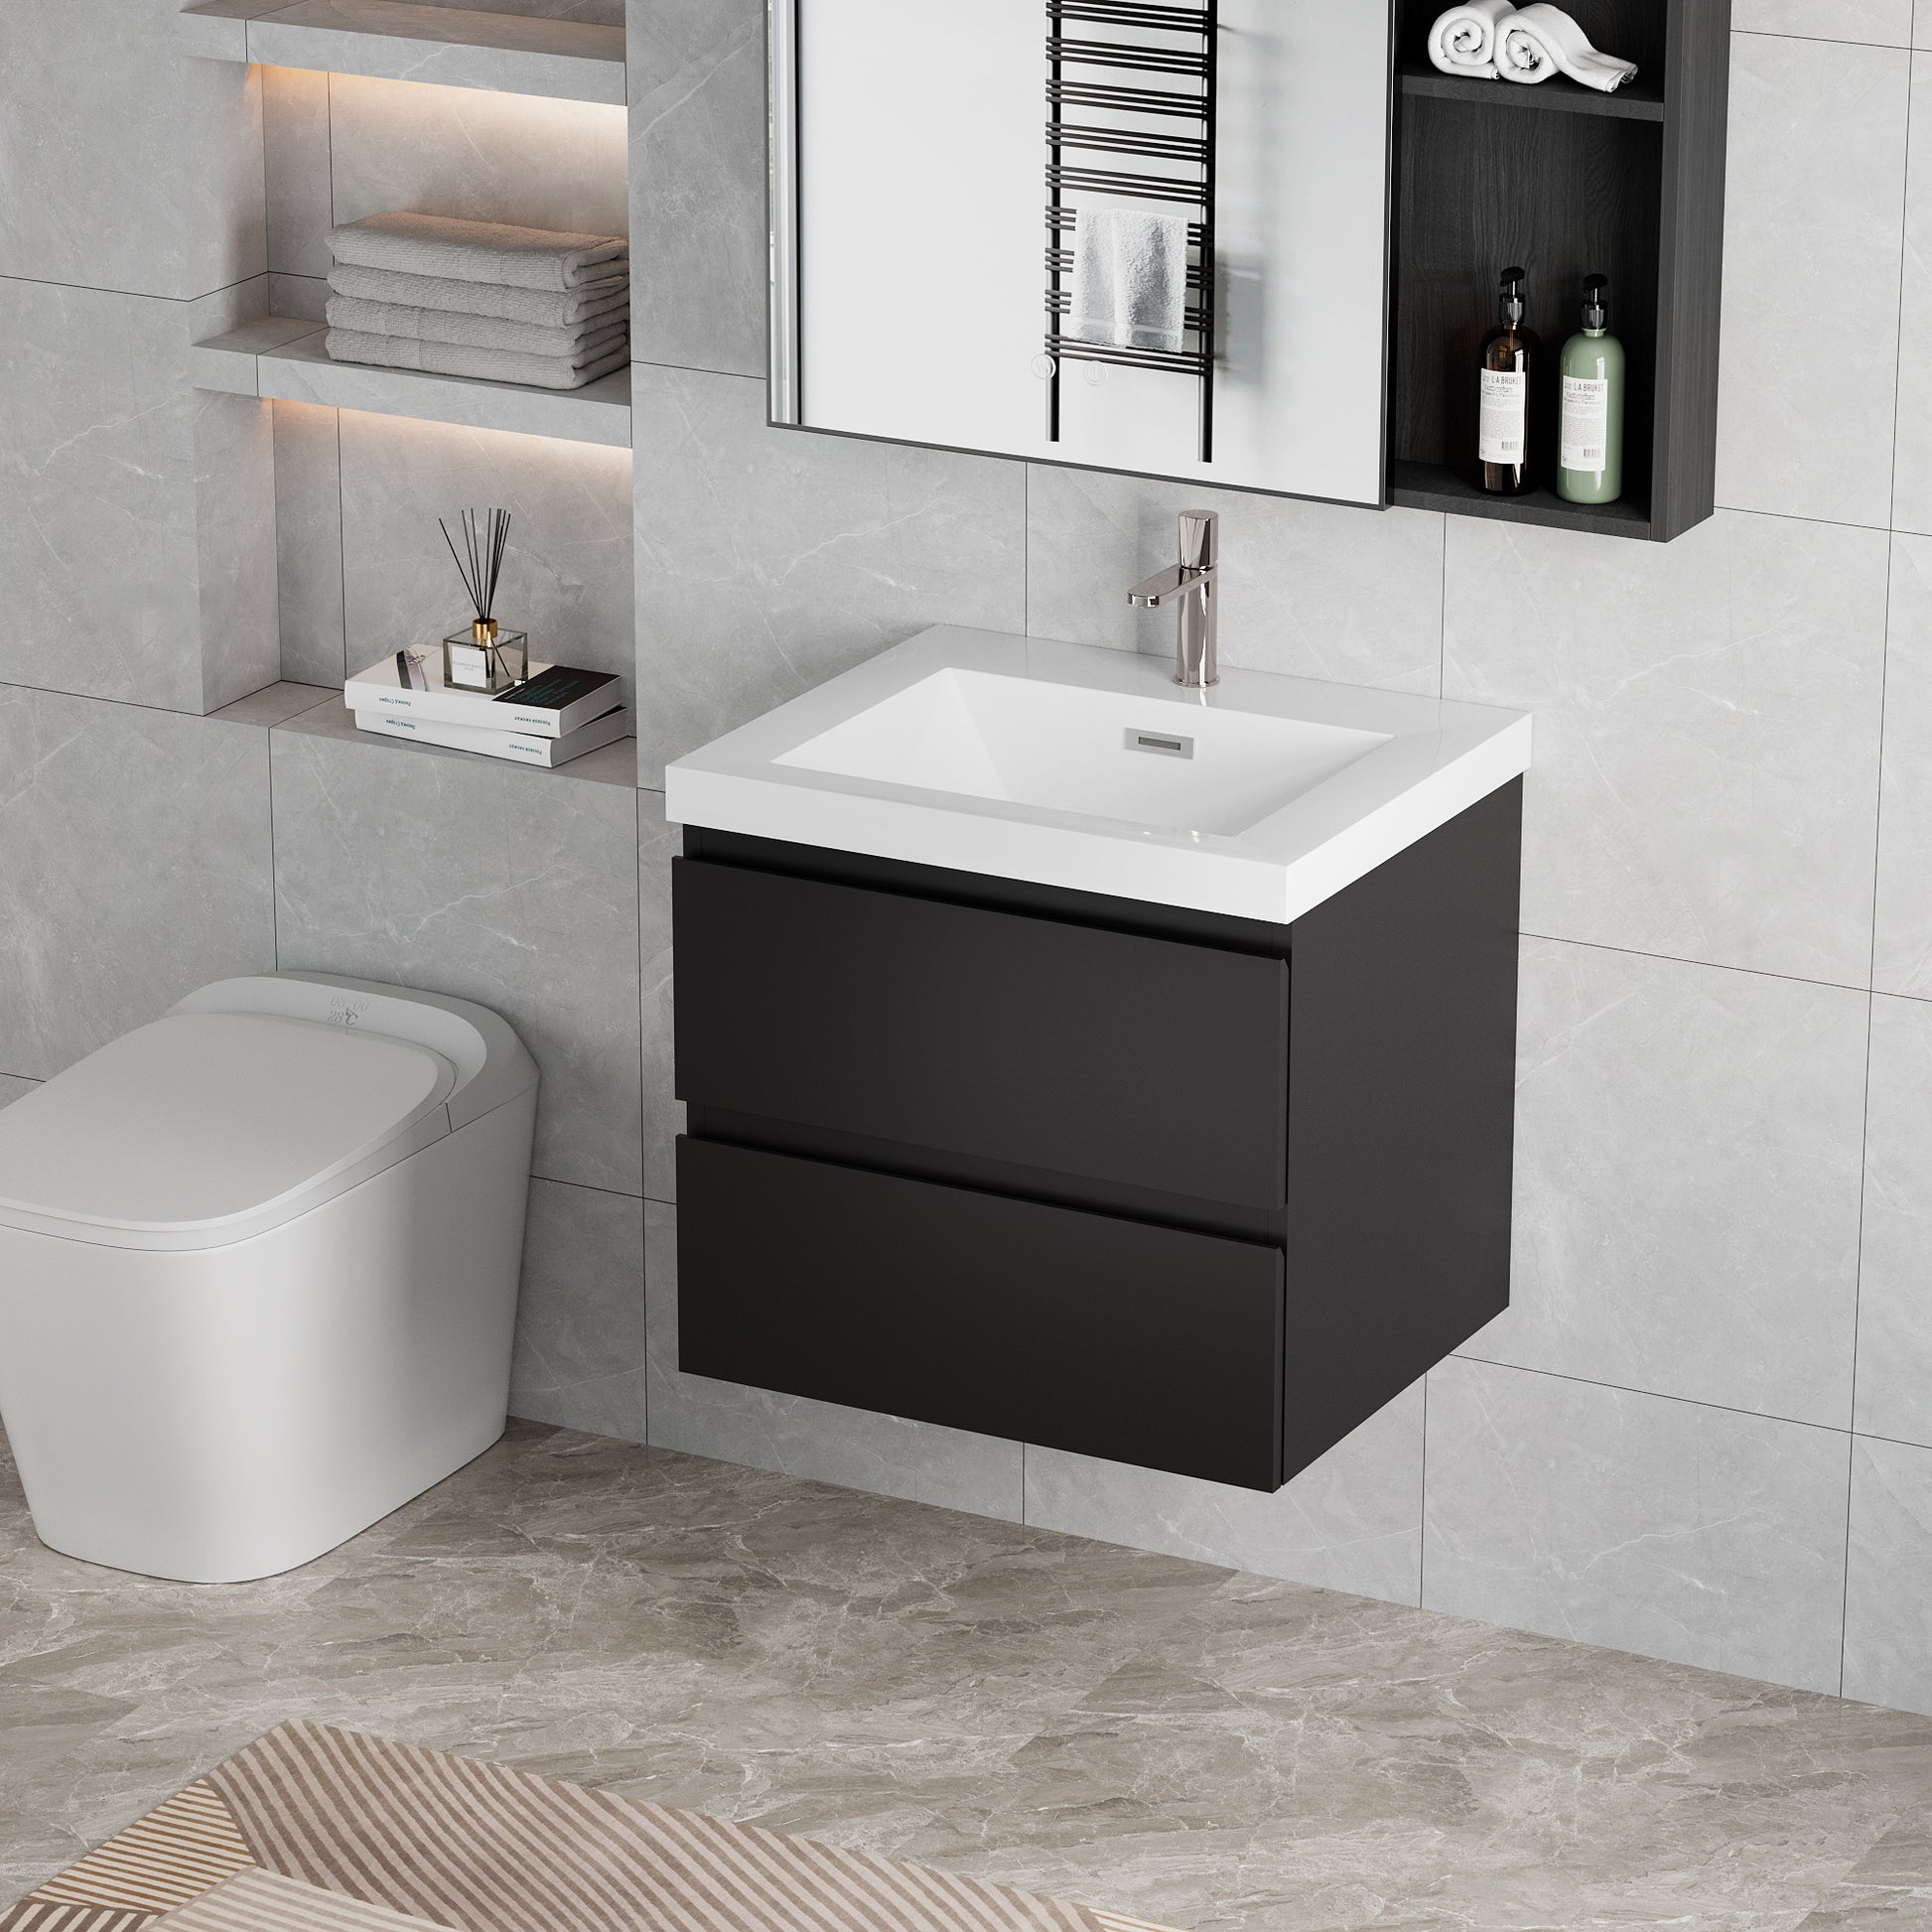 30" Floating Bathroom Vanity with Sink, Modern Wall 2-black-bathroom-wall mounted-mdf